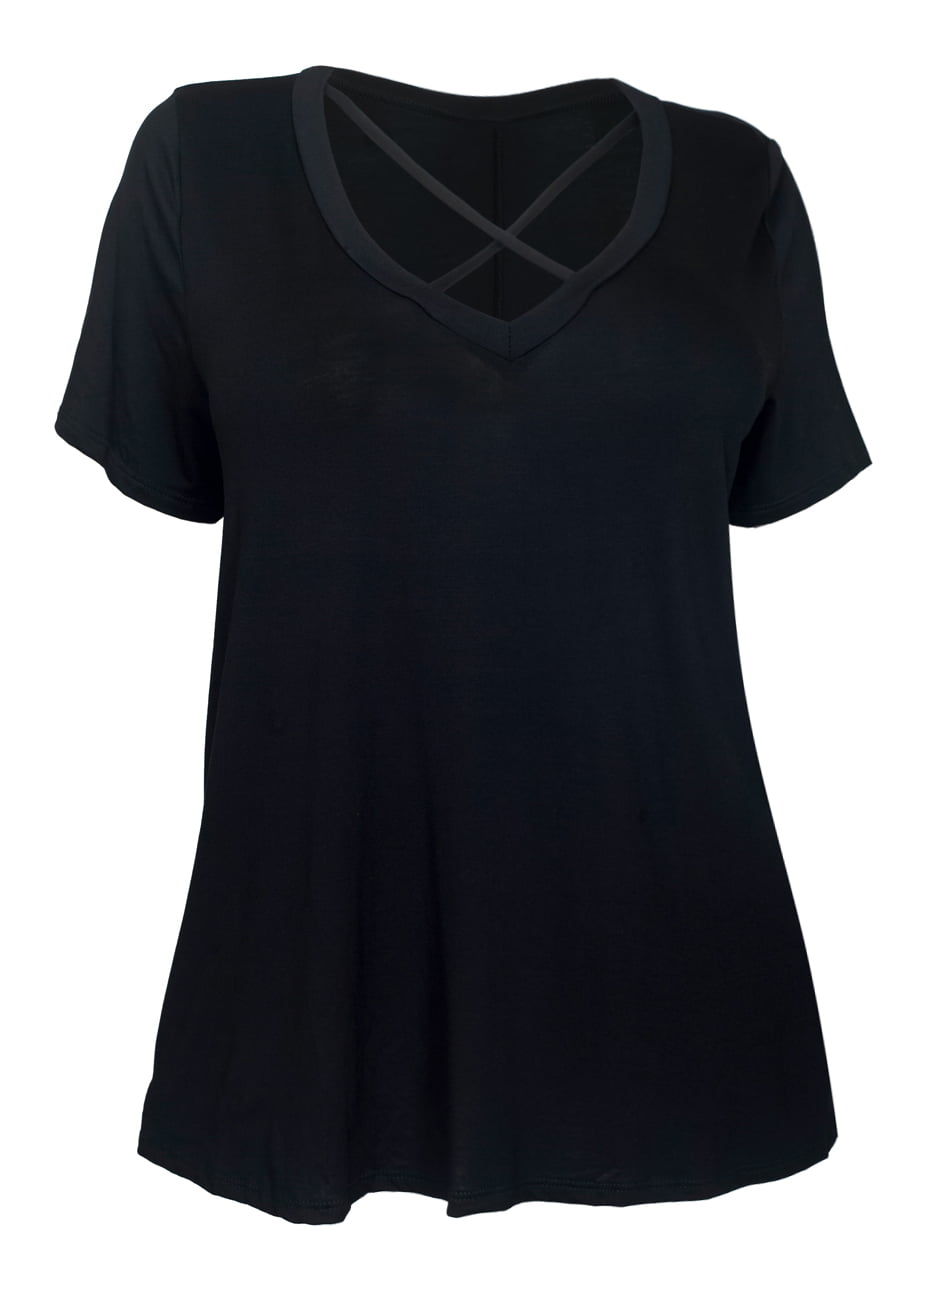 eVogues Apparel - eVogues Women's Cross Keyhole Short Sleeve Top Black ...